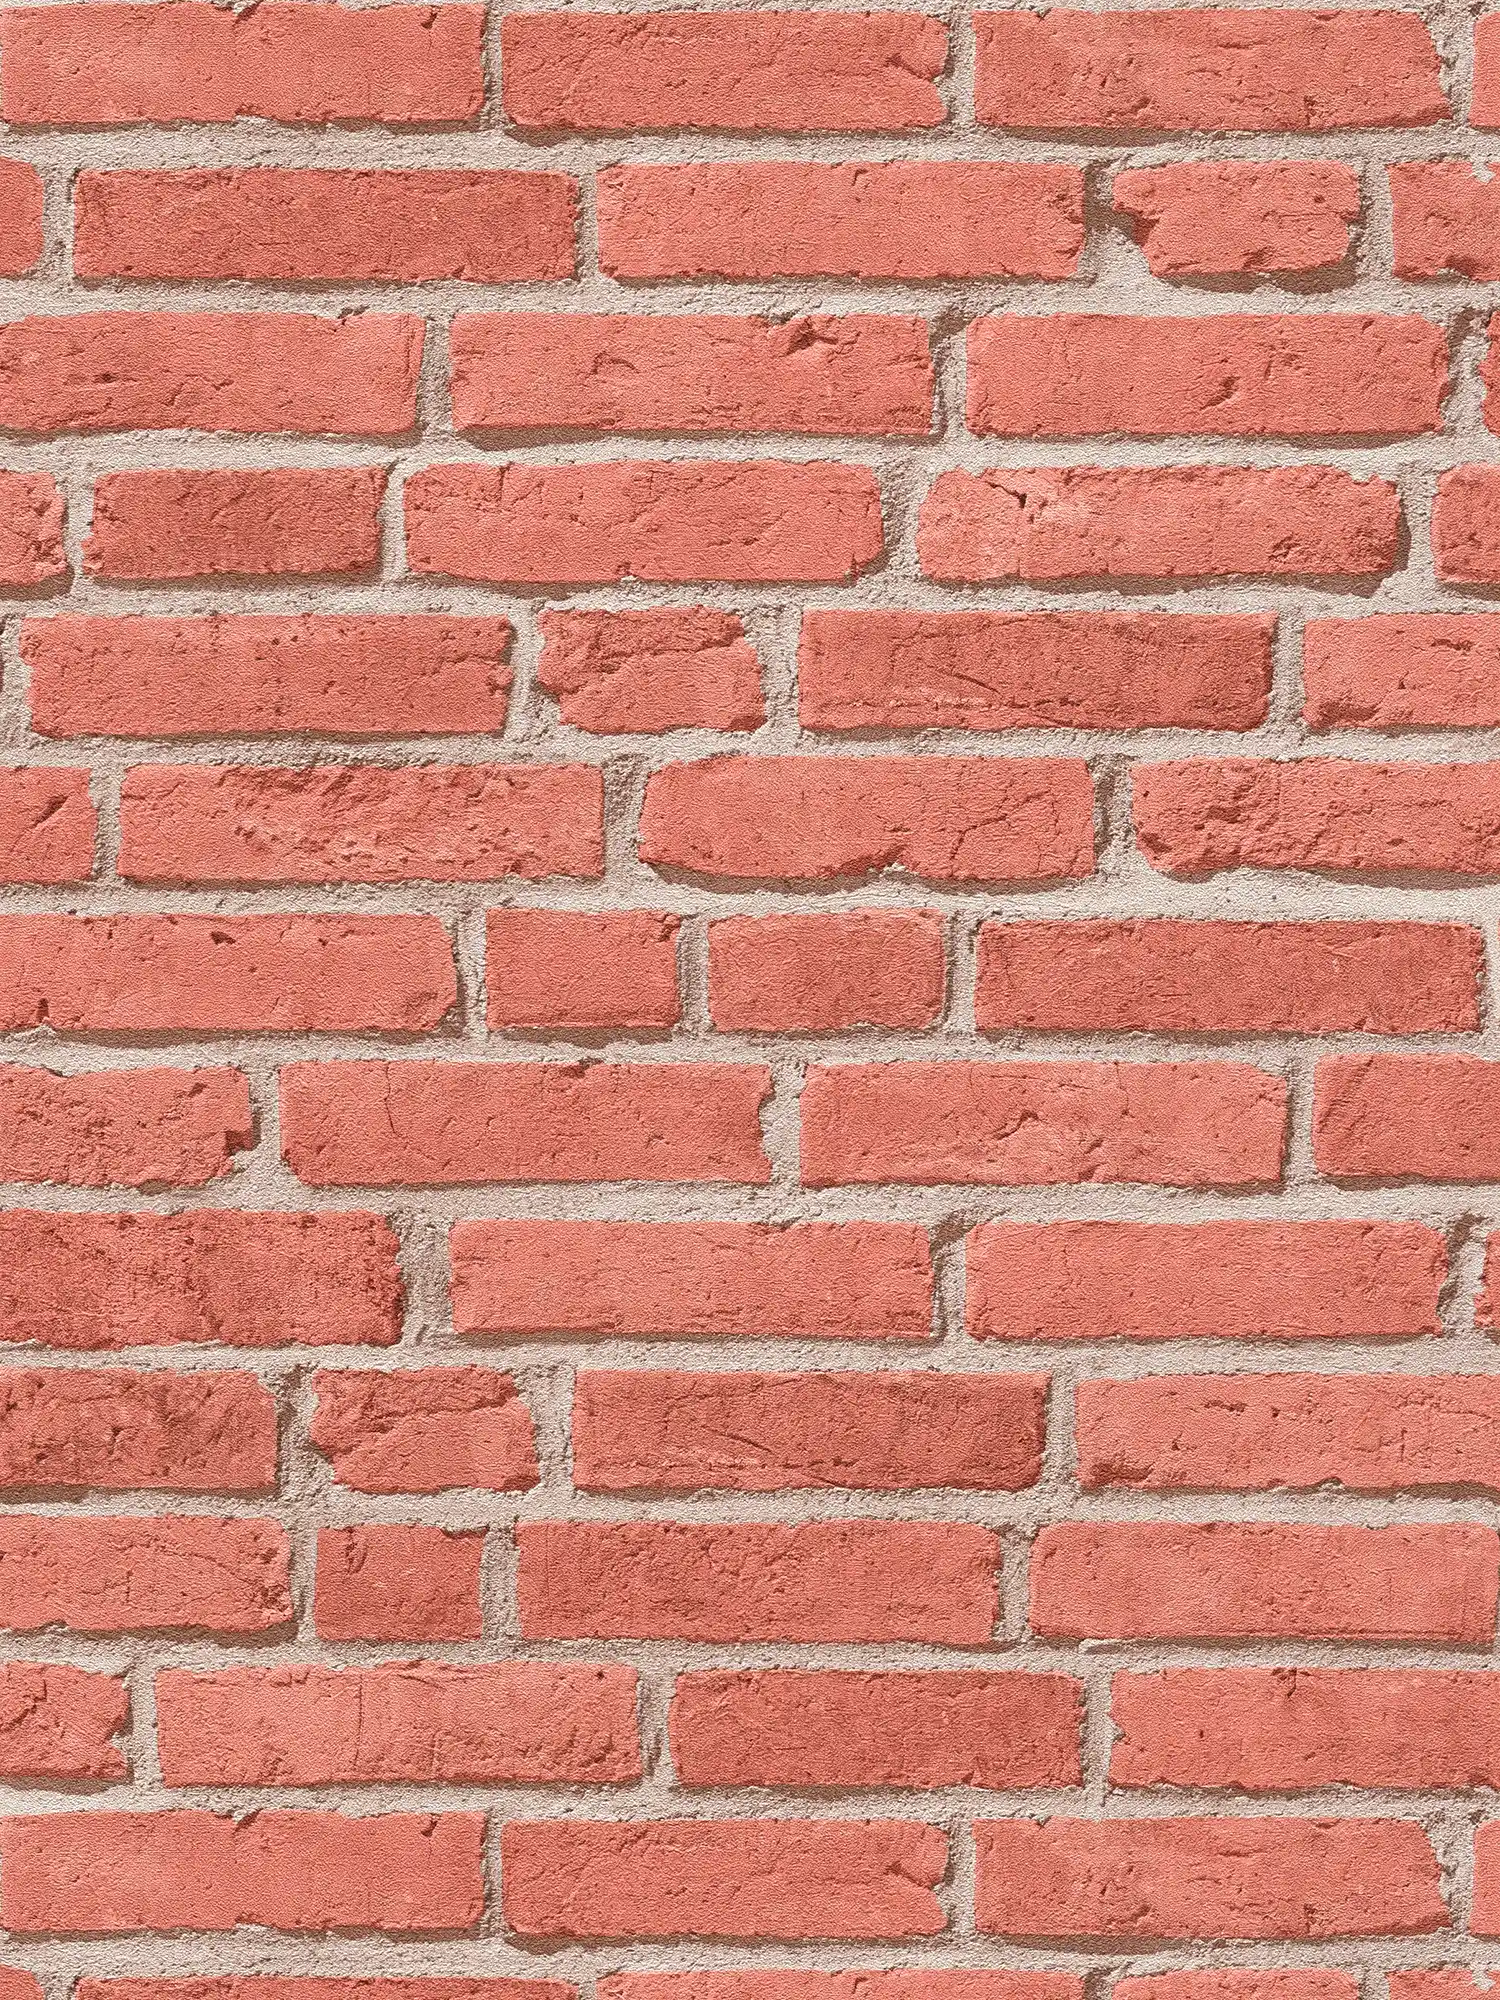 Stone wallpaper classic brick wall design & 3D effect - red, beige
